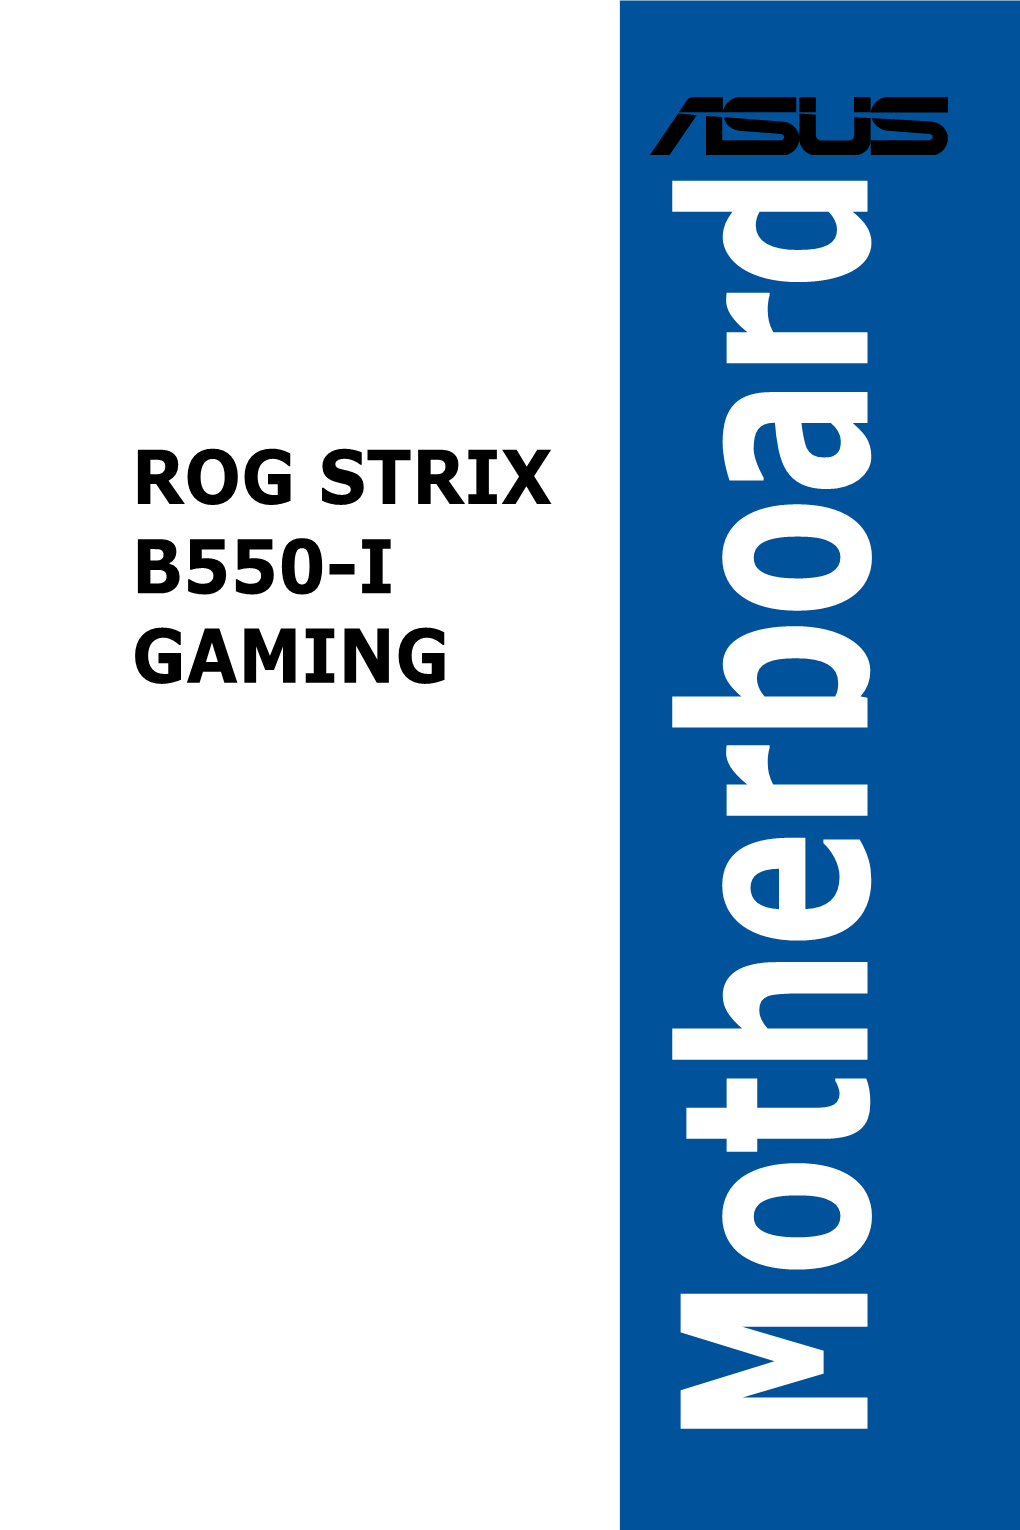 ROG STRIX B550-I GAMING Specifications Summary